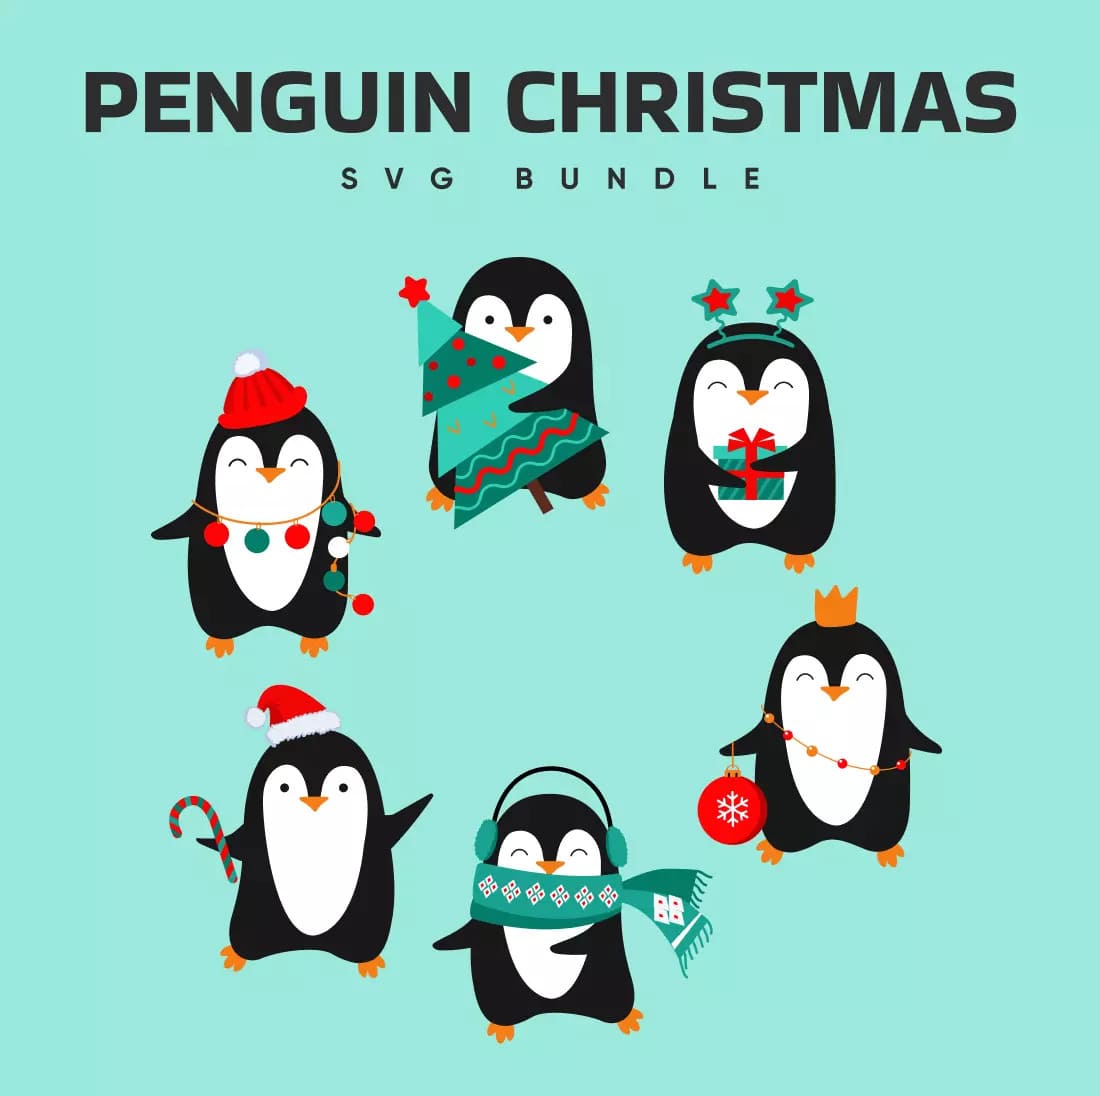 Penguin christmas svg bundle.